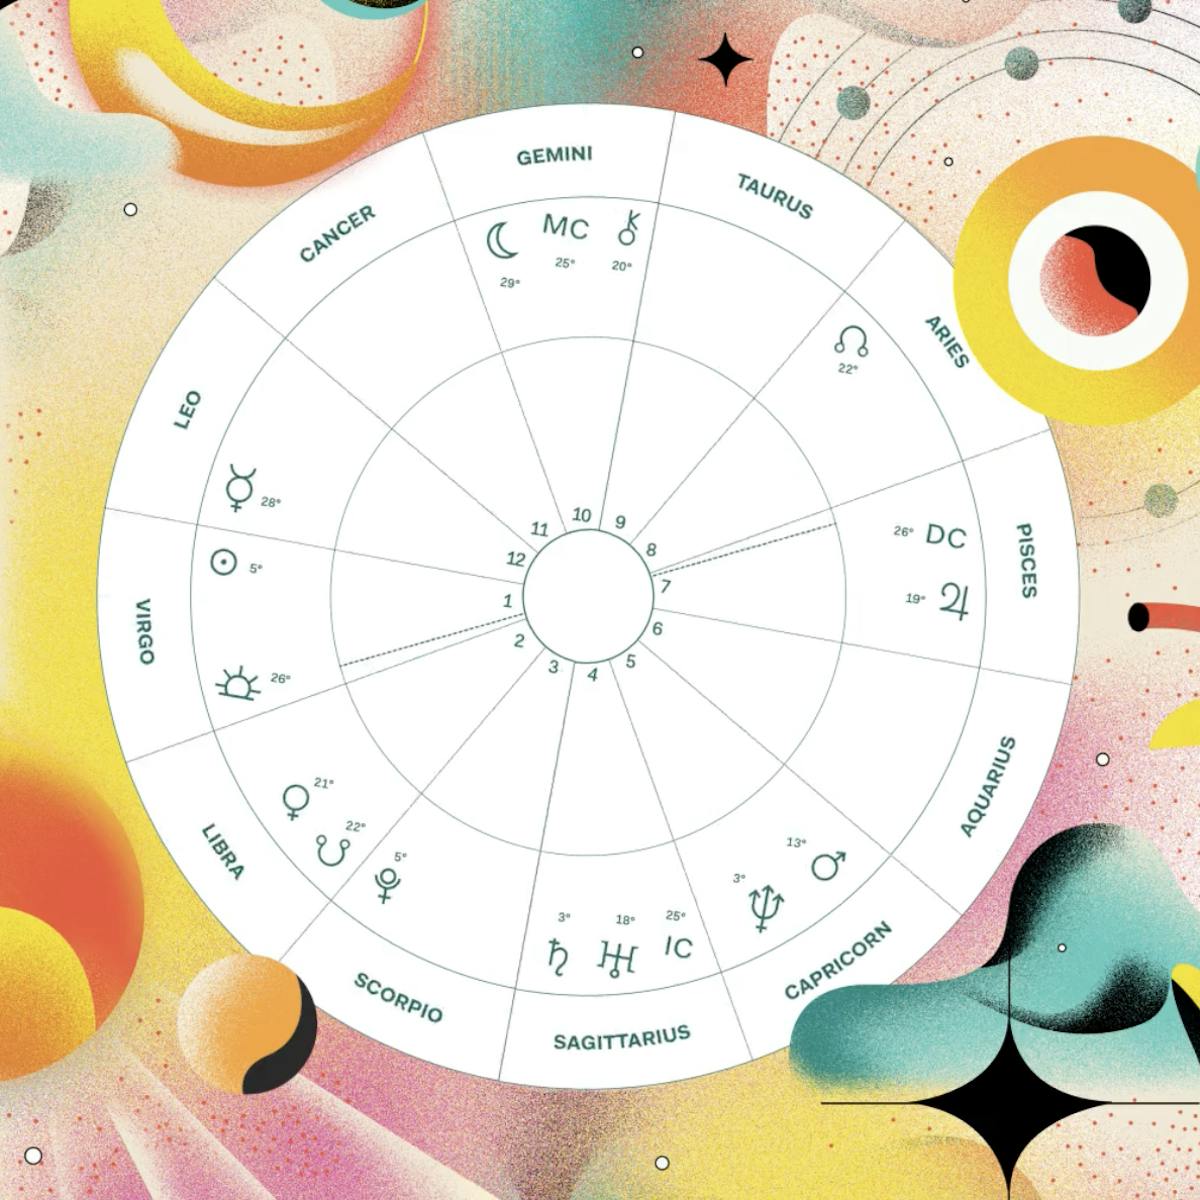 Astrology chart illustration by Jordan Moss